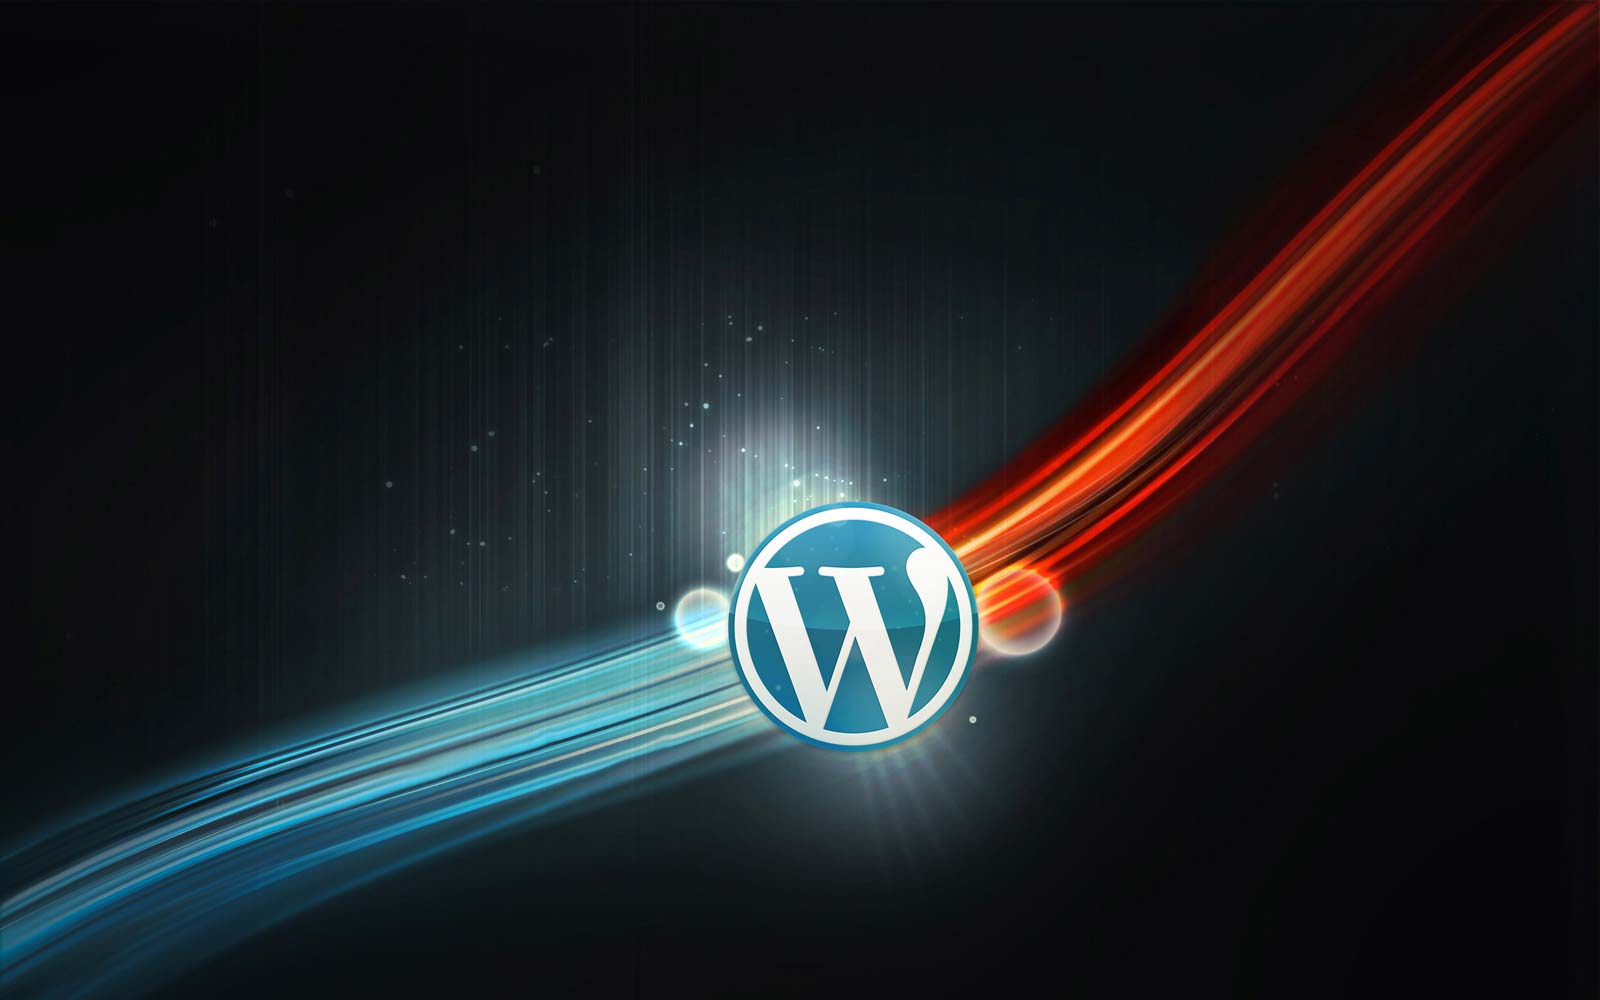  wordpres website design services in hyderabad,wordpress development company hyderabad